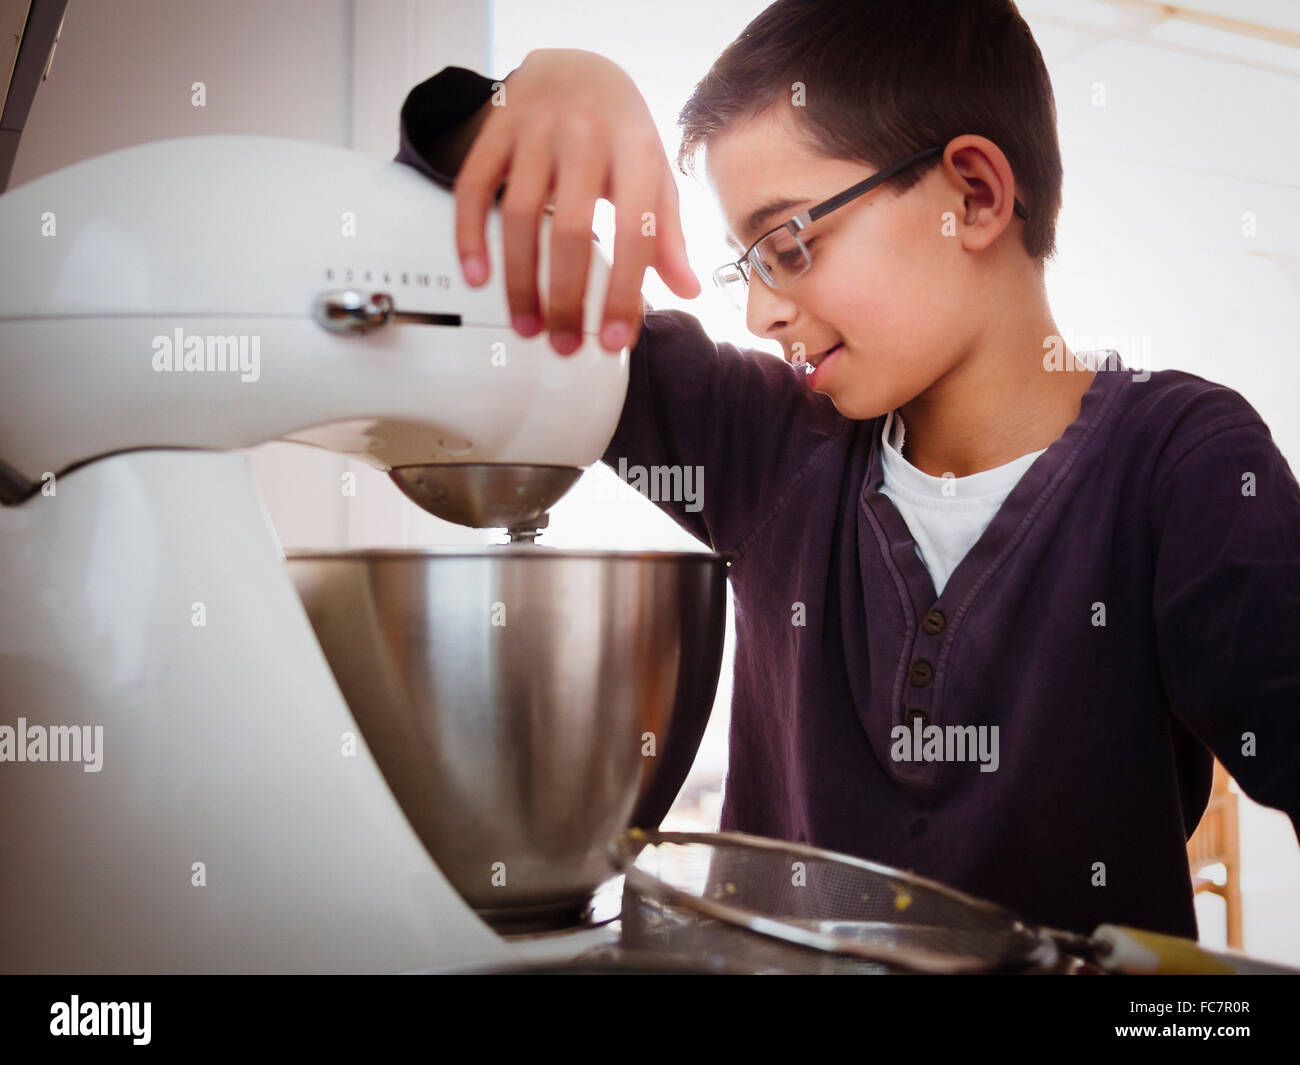 Mixed race boy baking in kitchen Stock Photo